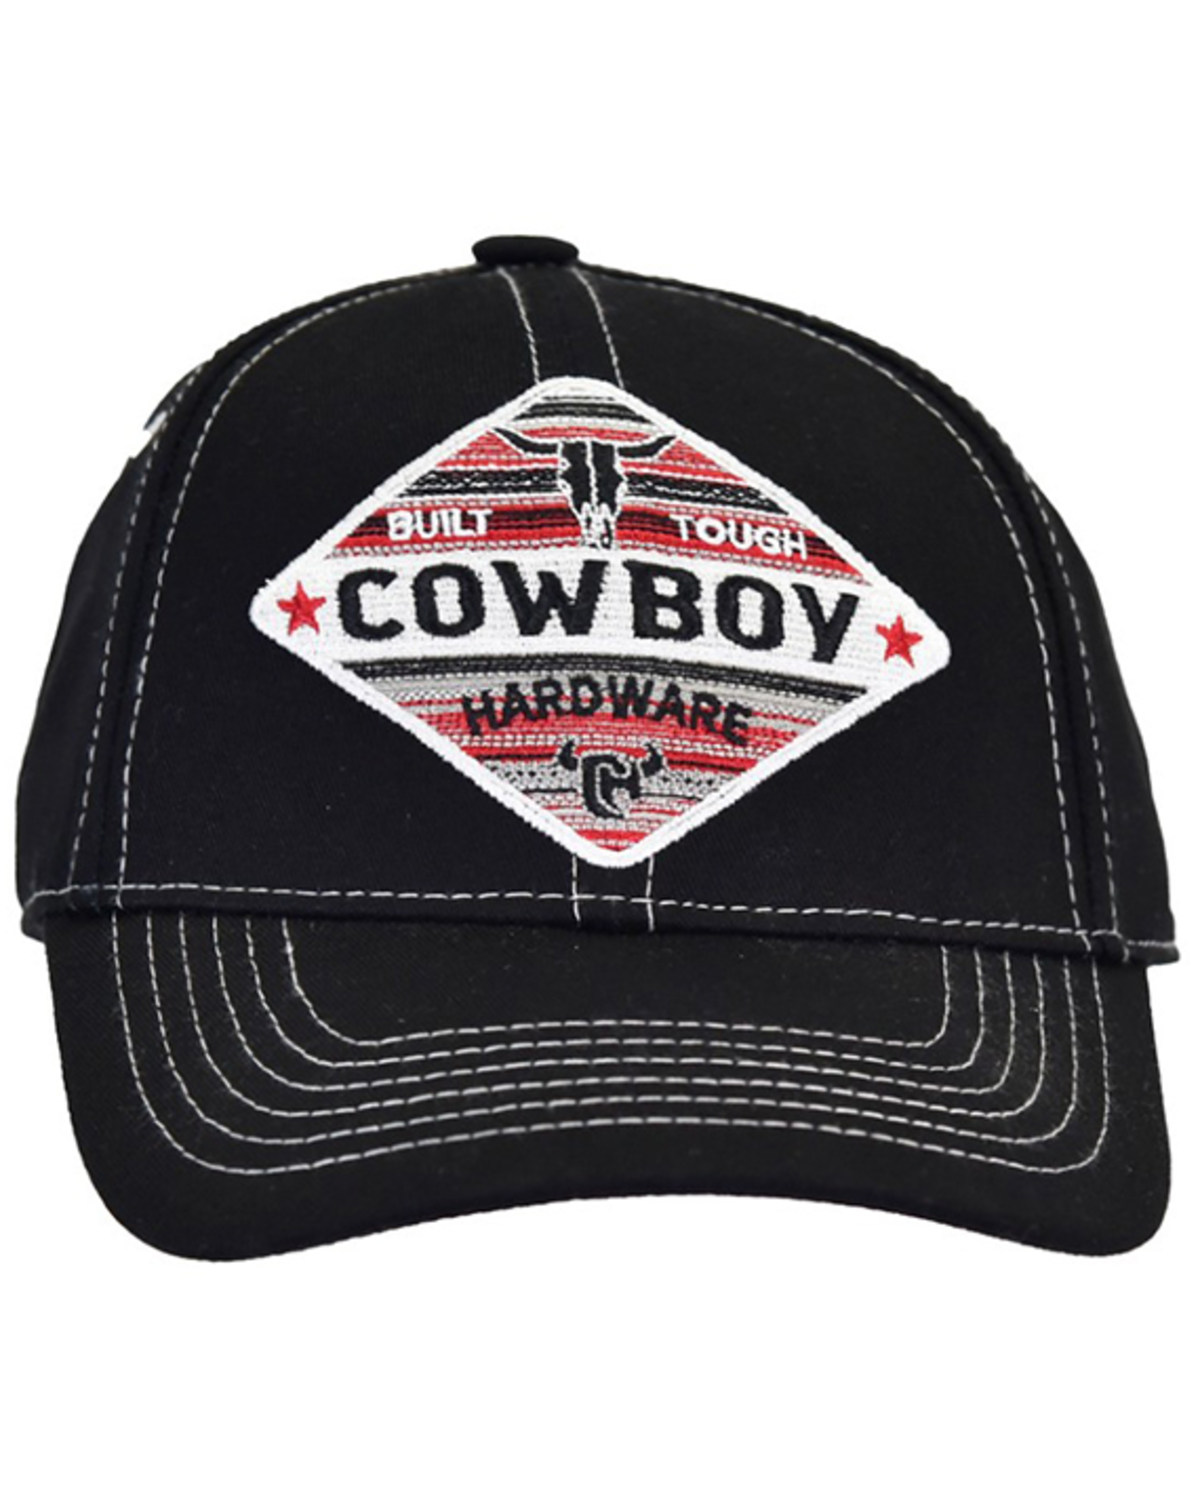 Cowboy Hardware Boys' Built Tough Shield Baseball Cap